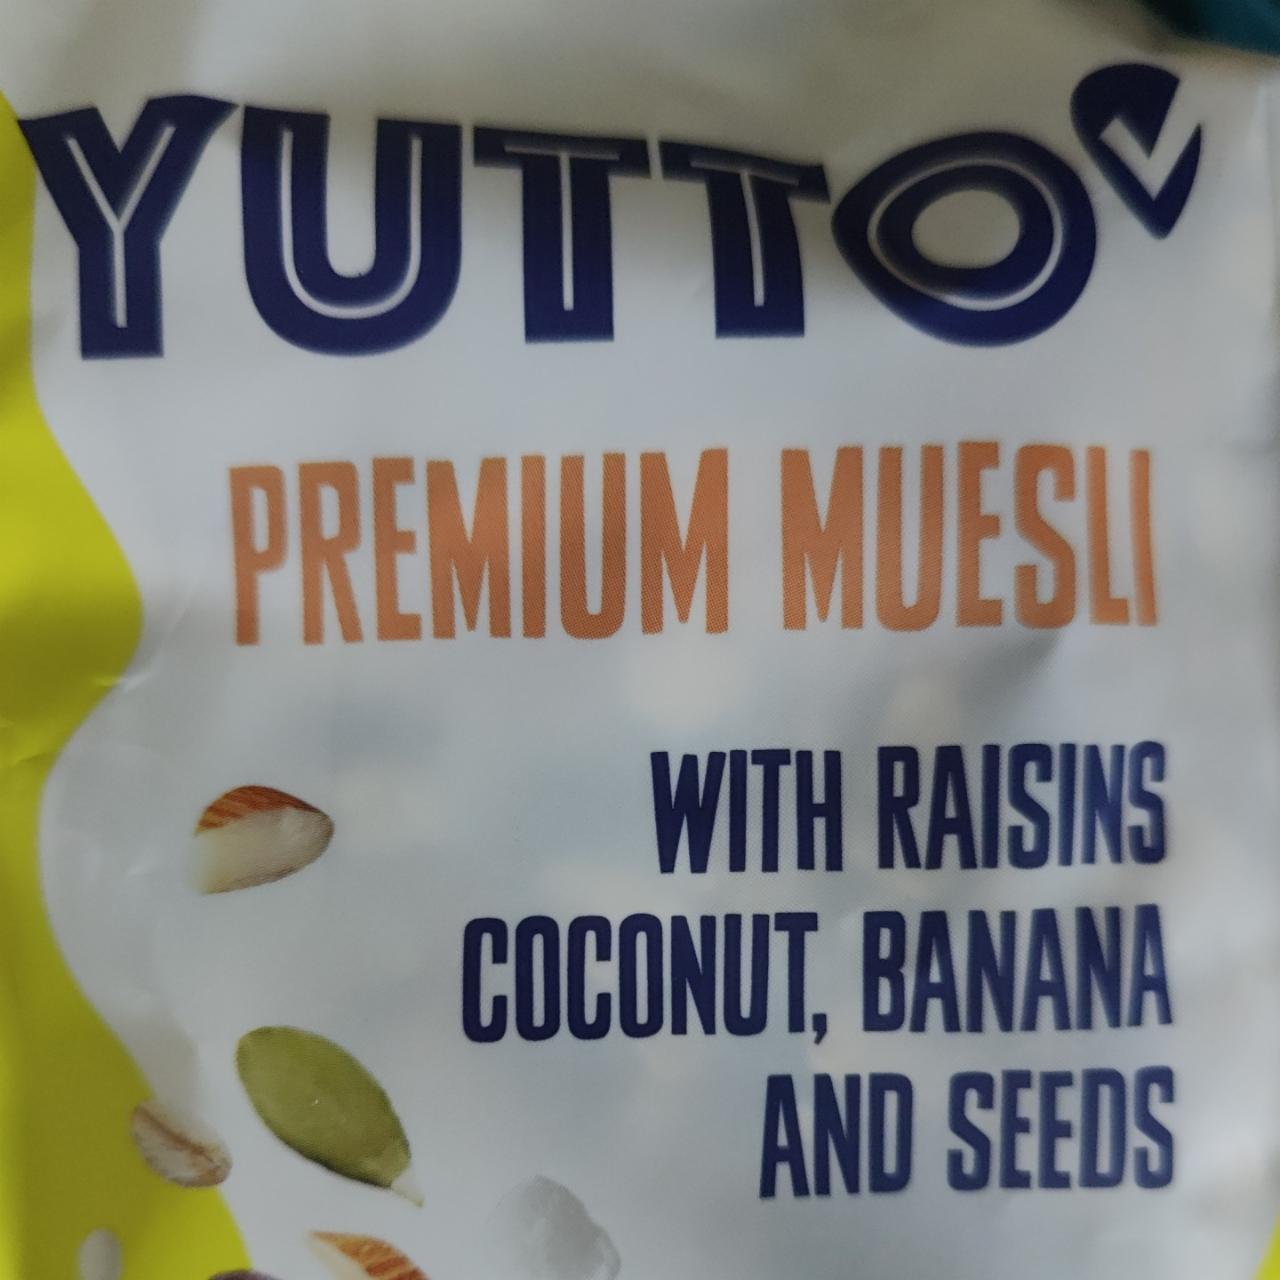 Fotografie - Premium Muesli with raisins, coconut, banana and seeds Yutto